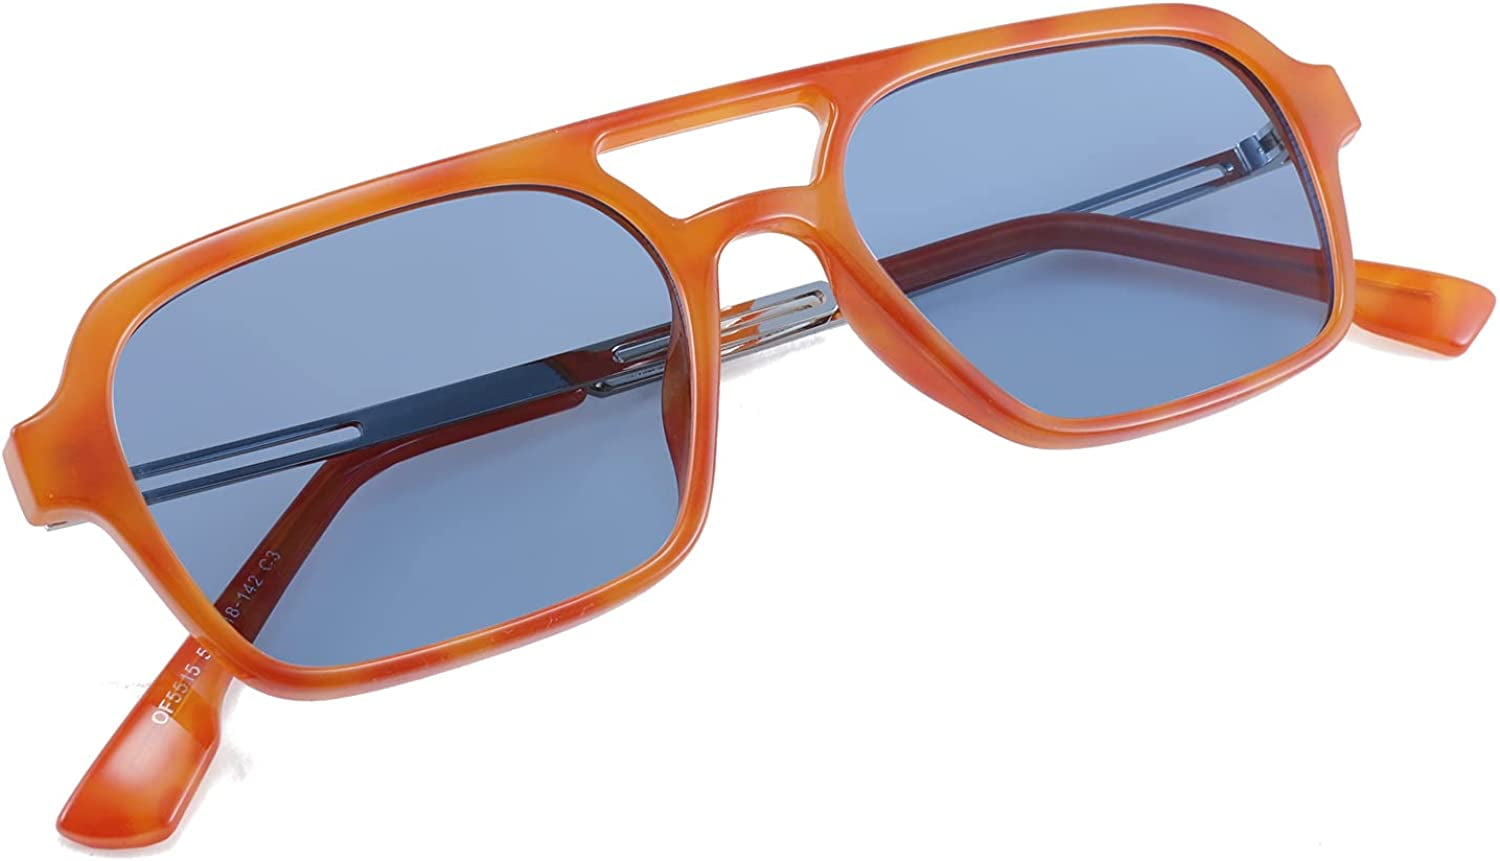 Retro 70s Flat Aviator Sunglasses Trendy Vintage Square Glasses for Women Men Metal Design Shades UV Protection